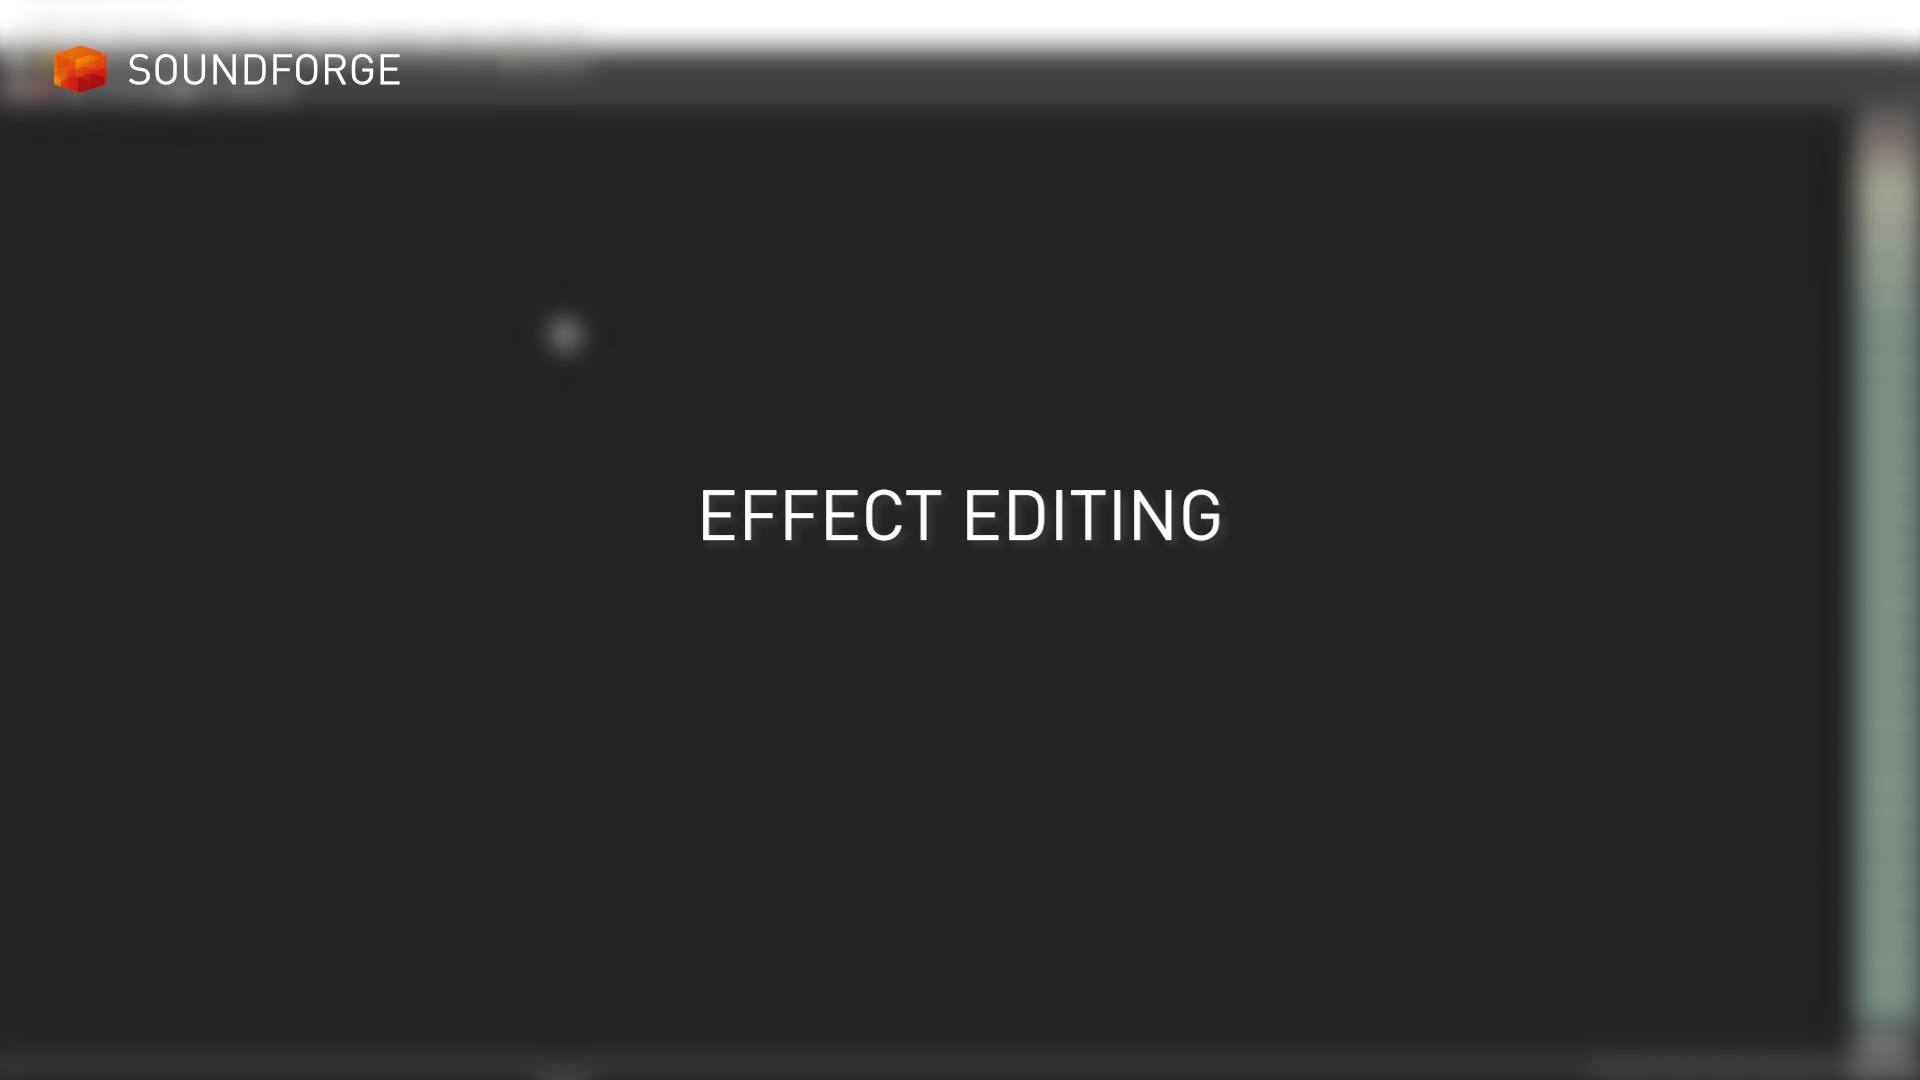 Effect editing